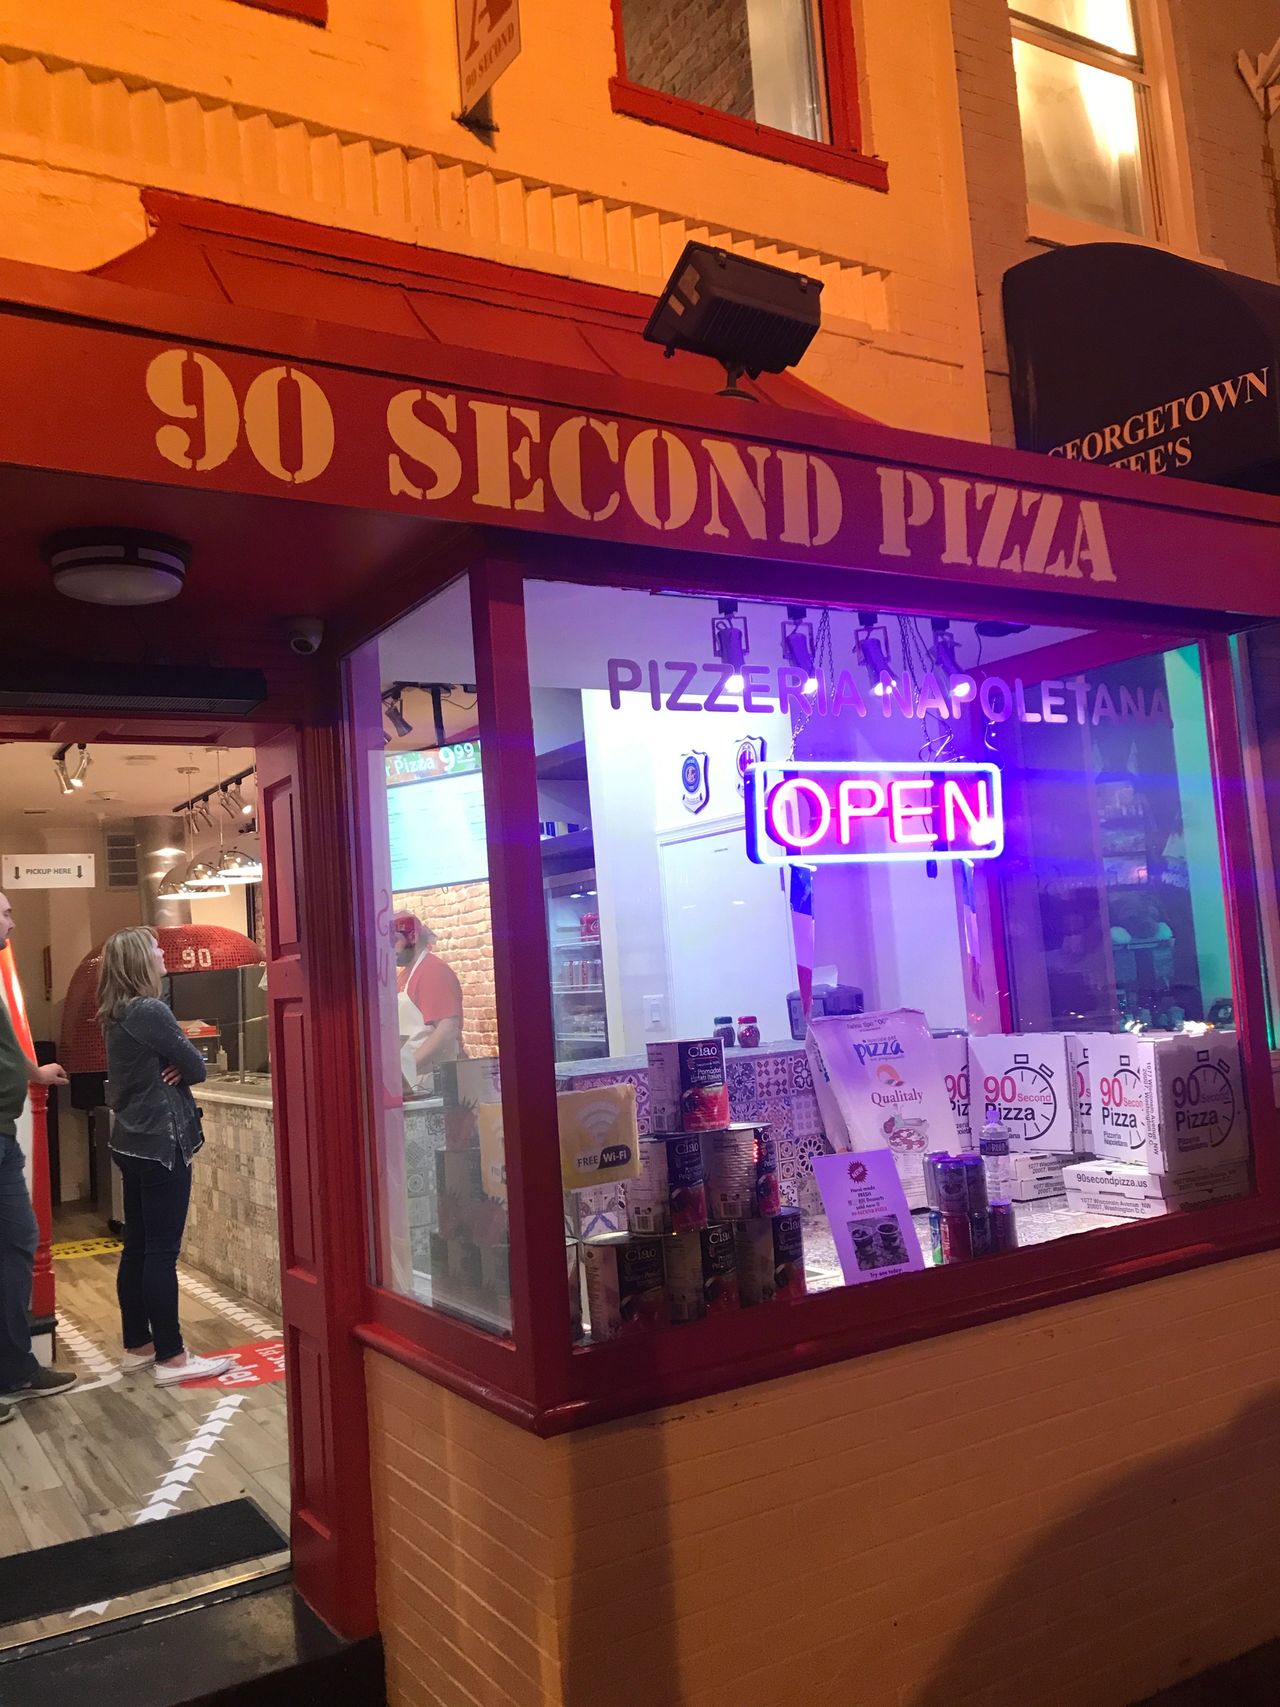 An exterior shot of 90 Second Pizza